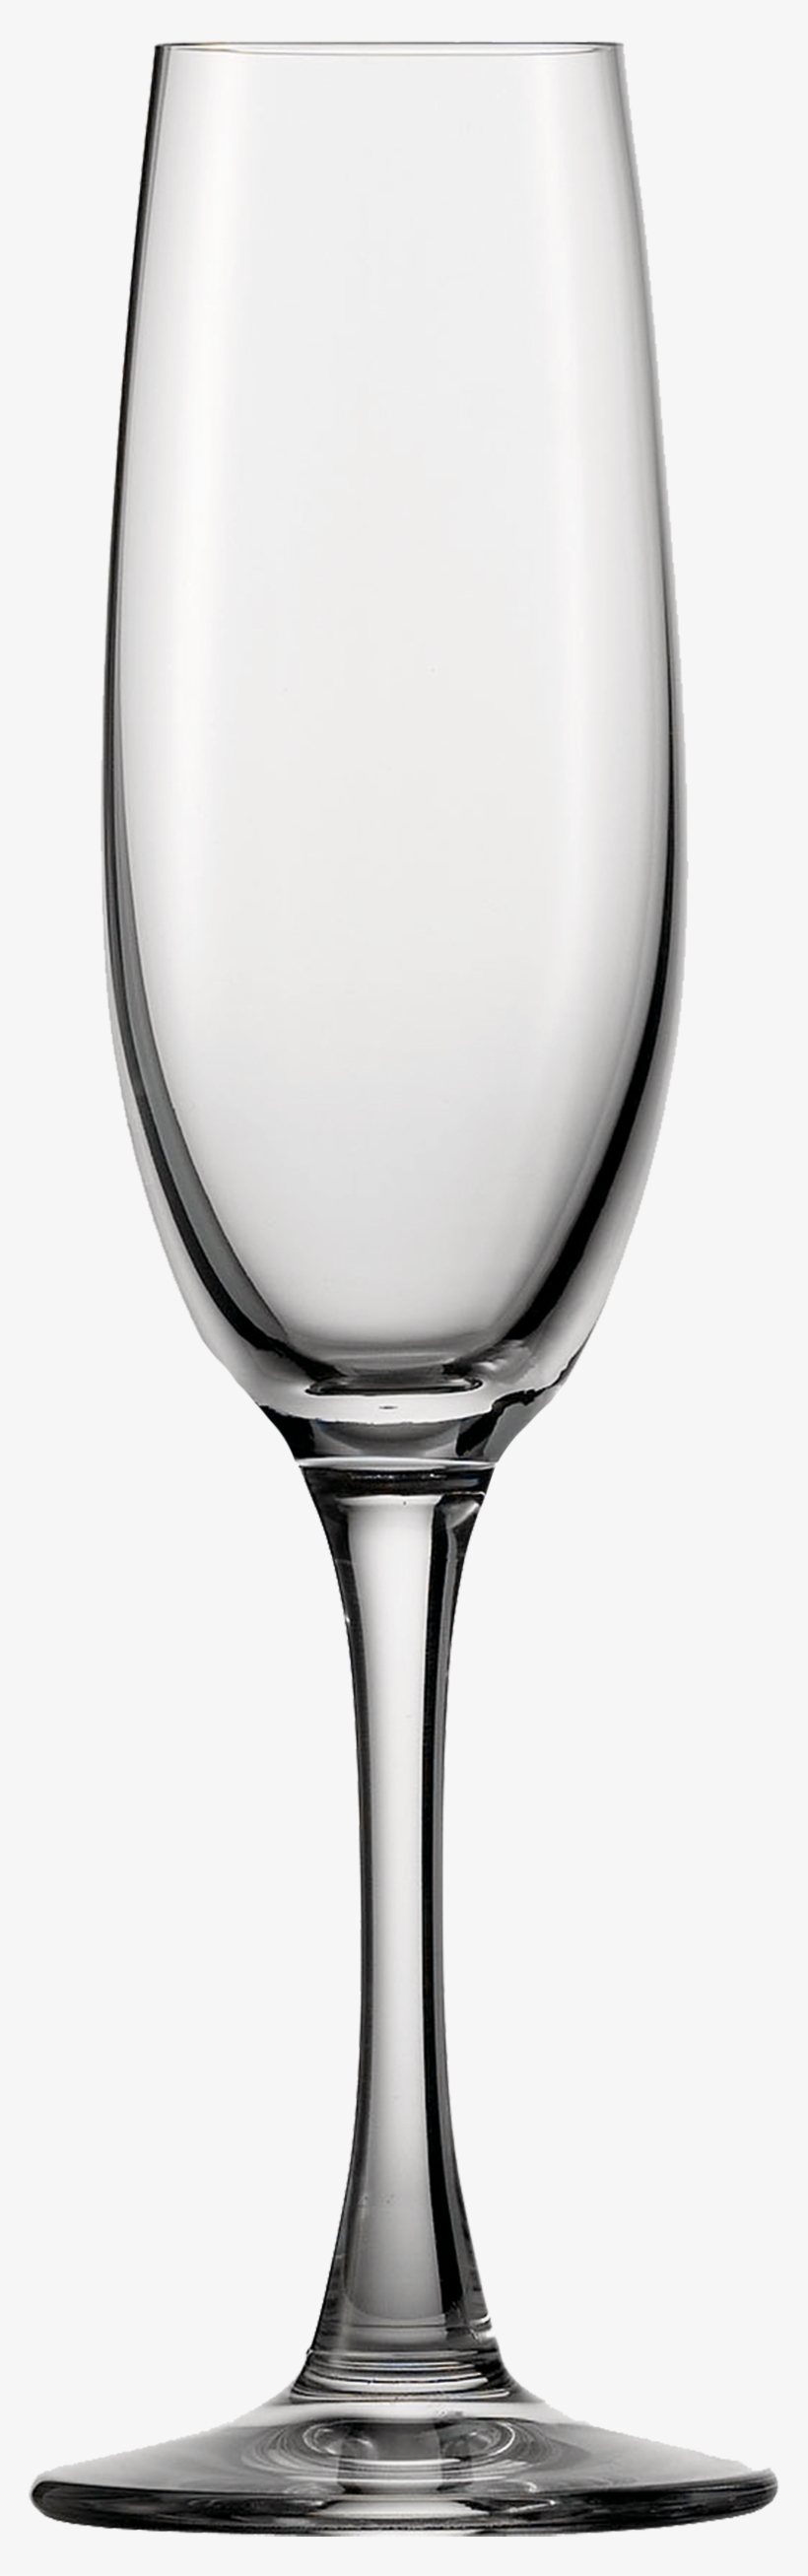 Personalized Champagne Flute Glass - Spiegelau Champagne Flutes, transparent png #927474